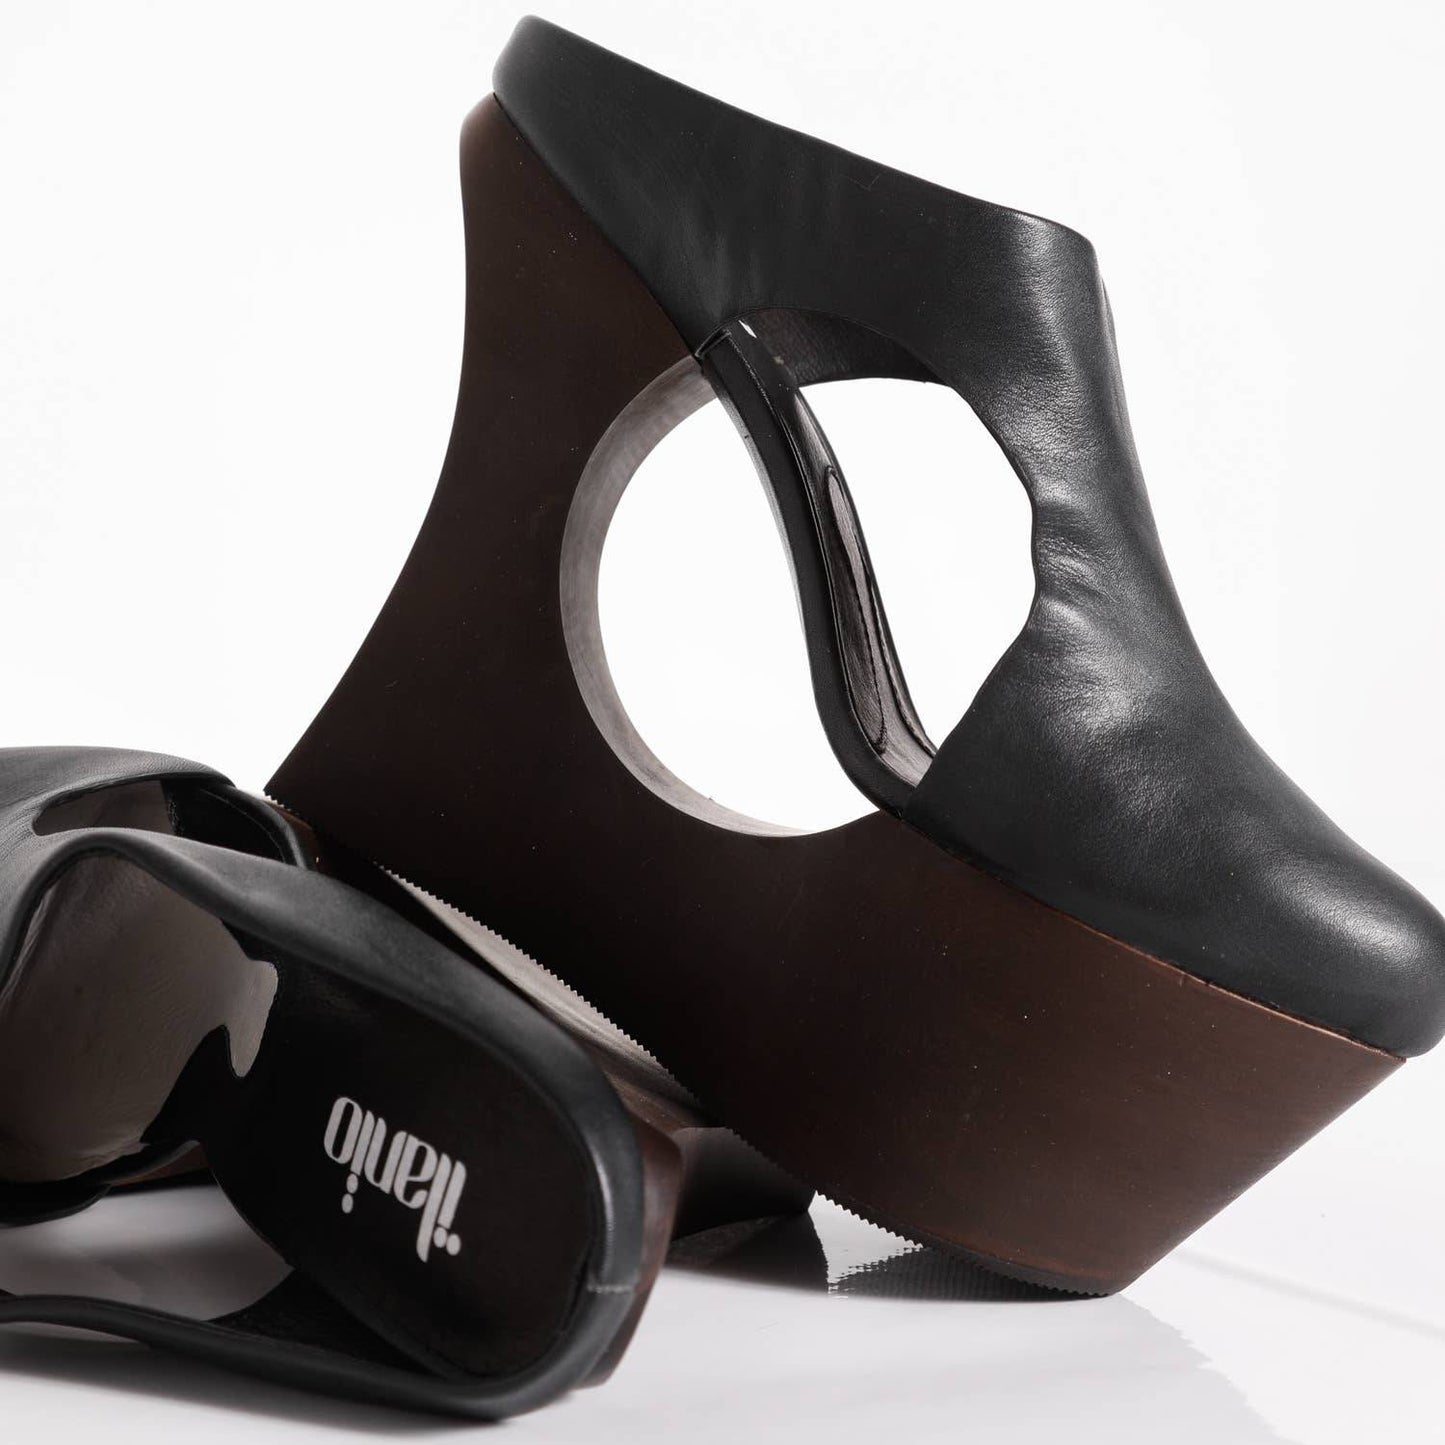 ILANIO Black Leather And Wood Retro Cutout Platform Shoes